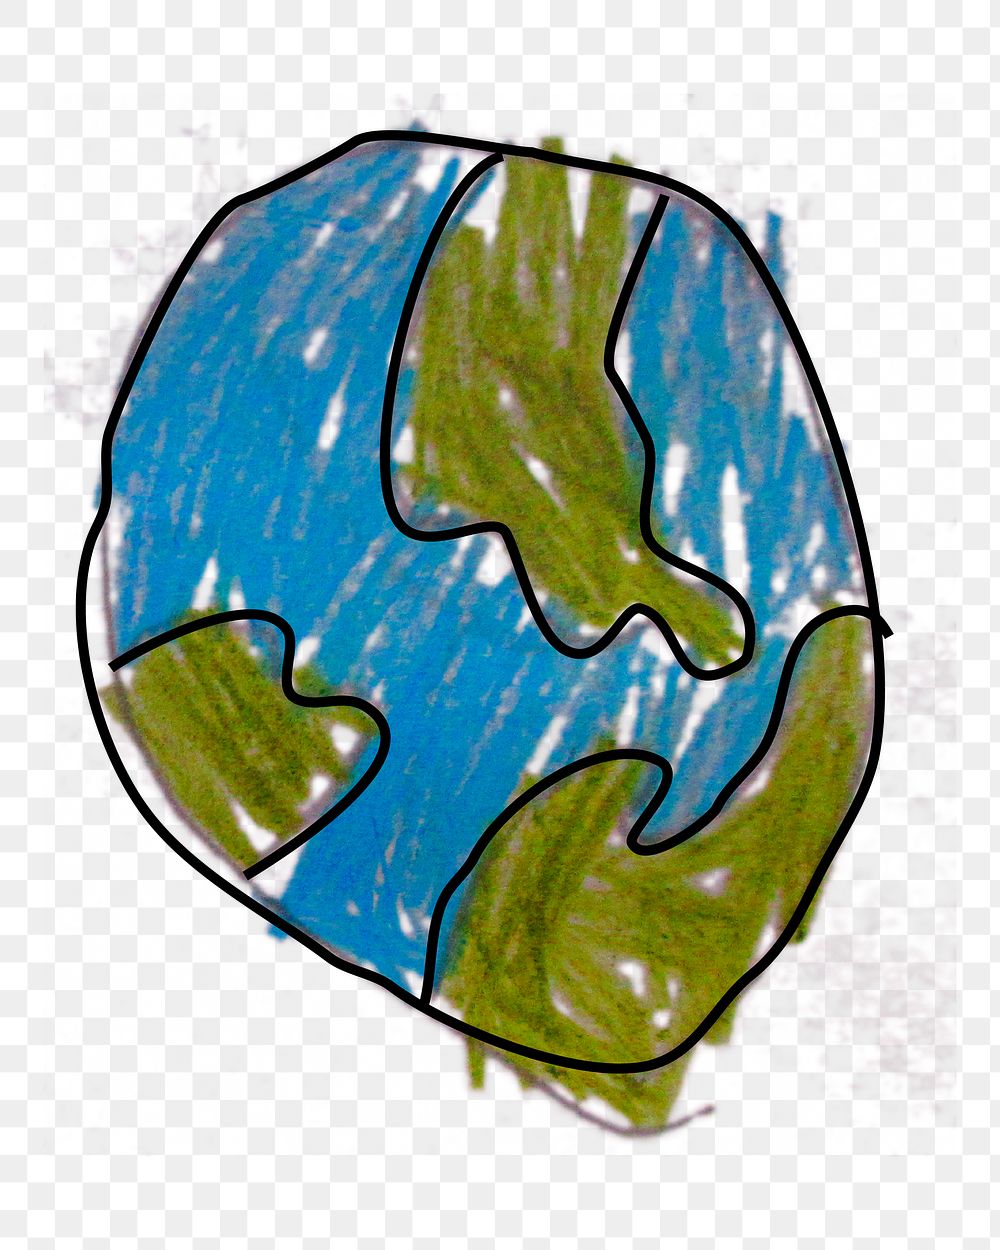 Planet earth png illustration, transparent background. Free public domain CC0 image.